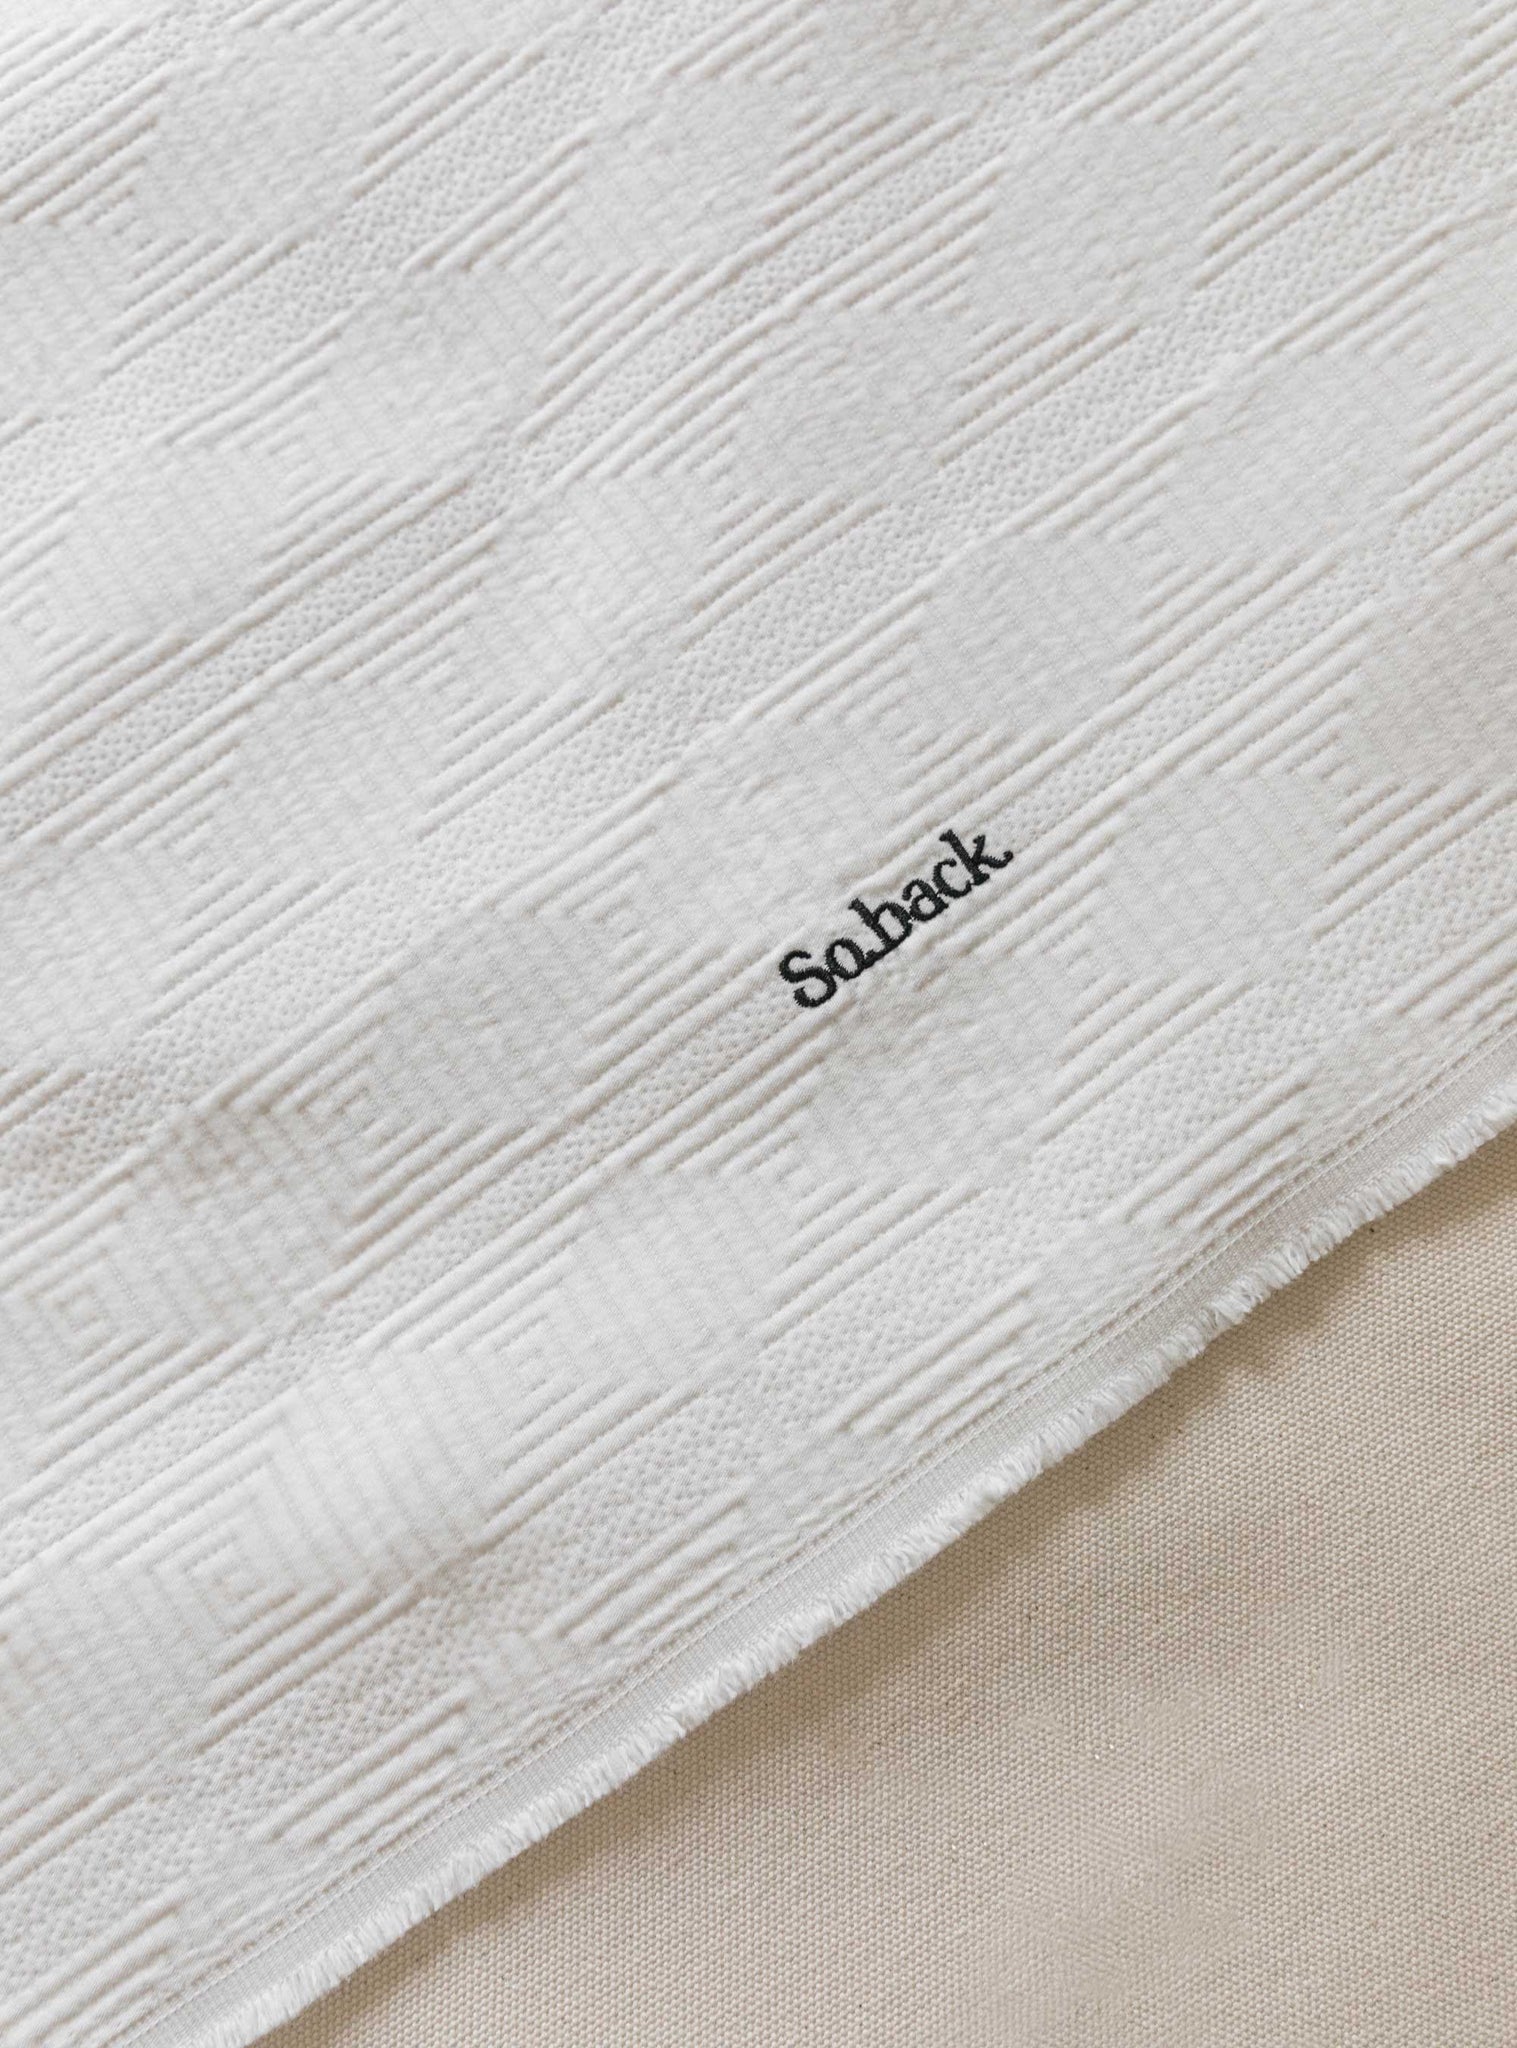 So_back Square Pattern Blanket